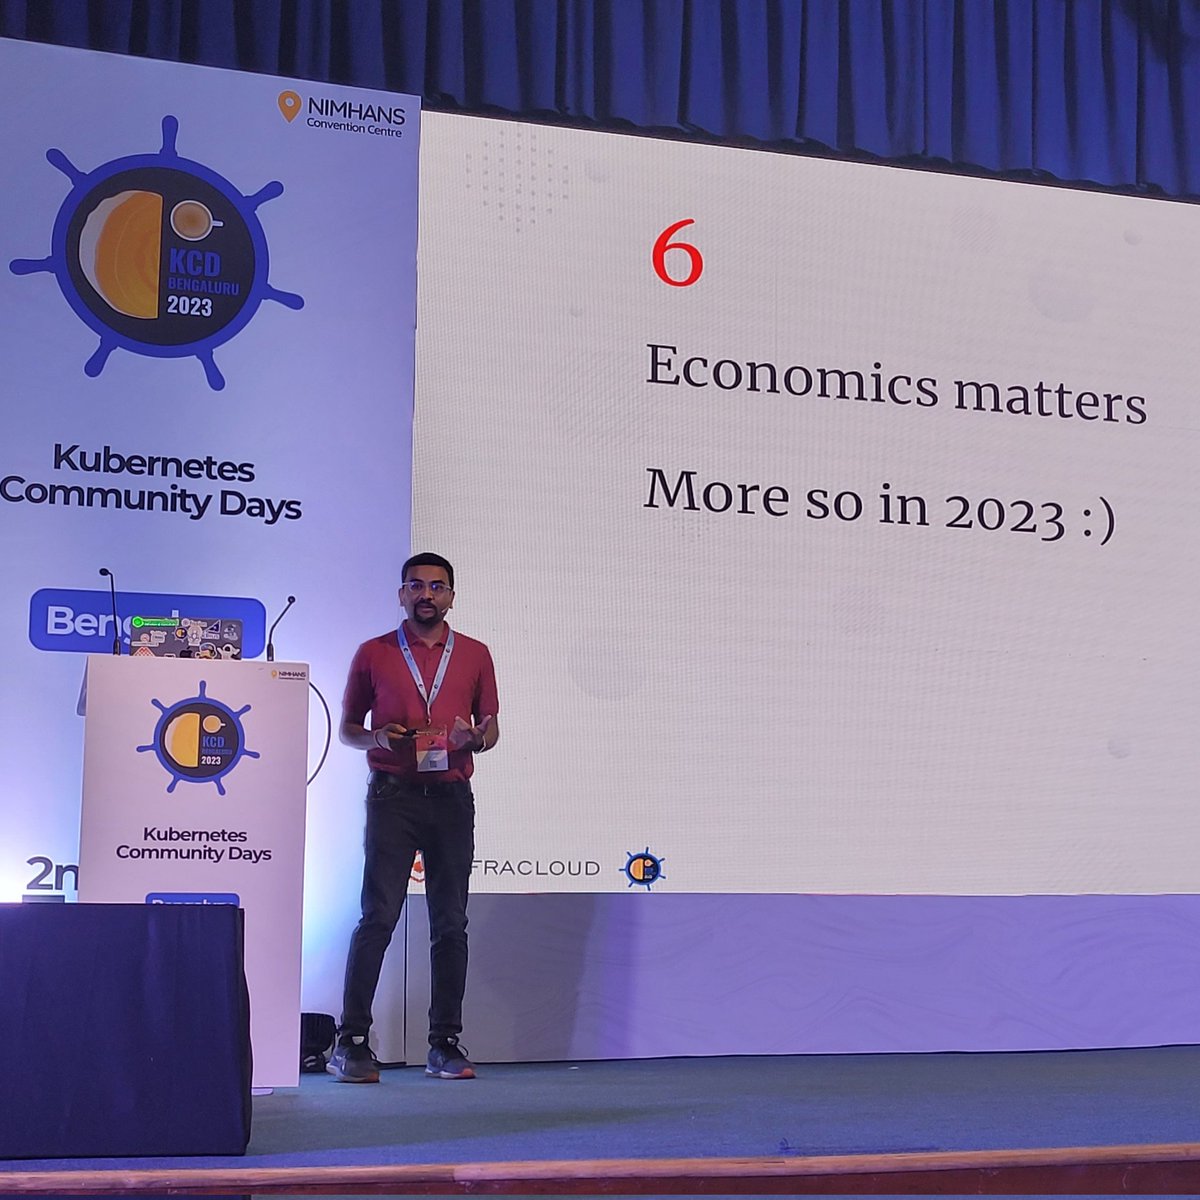 The most insightful talk I've had the pleasure of attending: 9 Lessons from #k8s in Enterprise, by @vishal_biyani.

#Kubernetes
@infracloudio
@KCDBengaluru
#Bangalore
#Bengaluru
#cloudnative